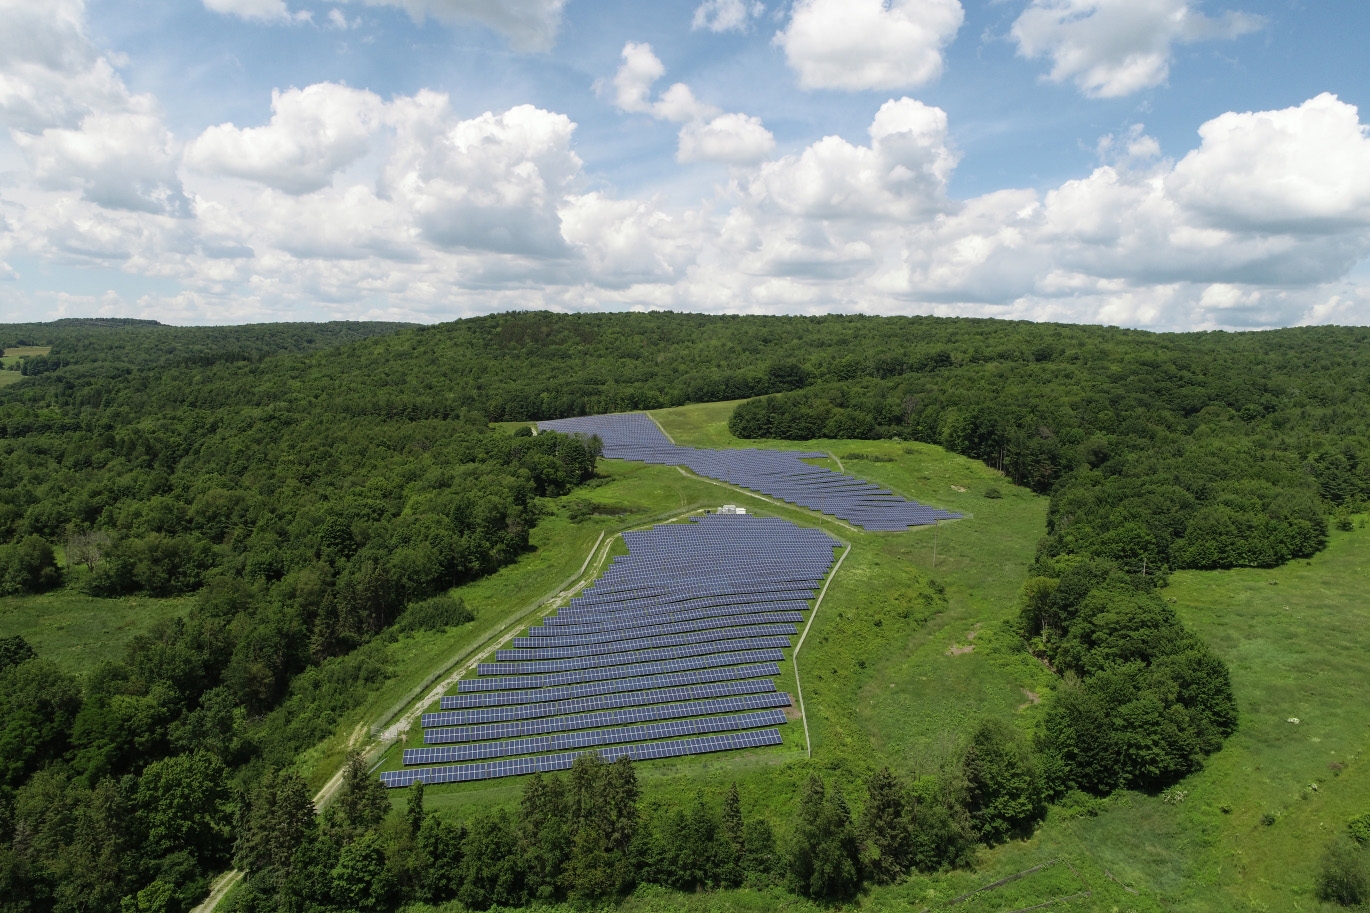 Drone image of the Cornell Ruminant Center Solar Farm panels